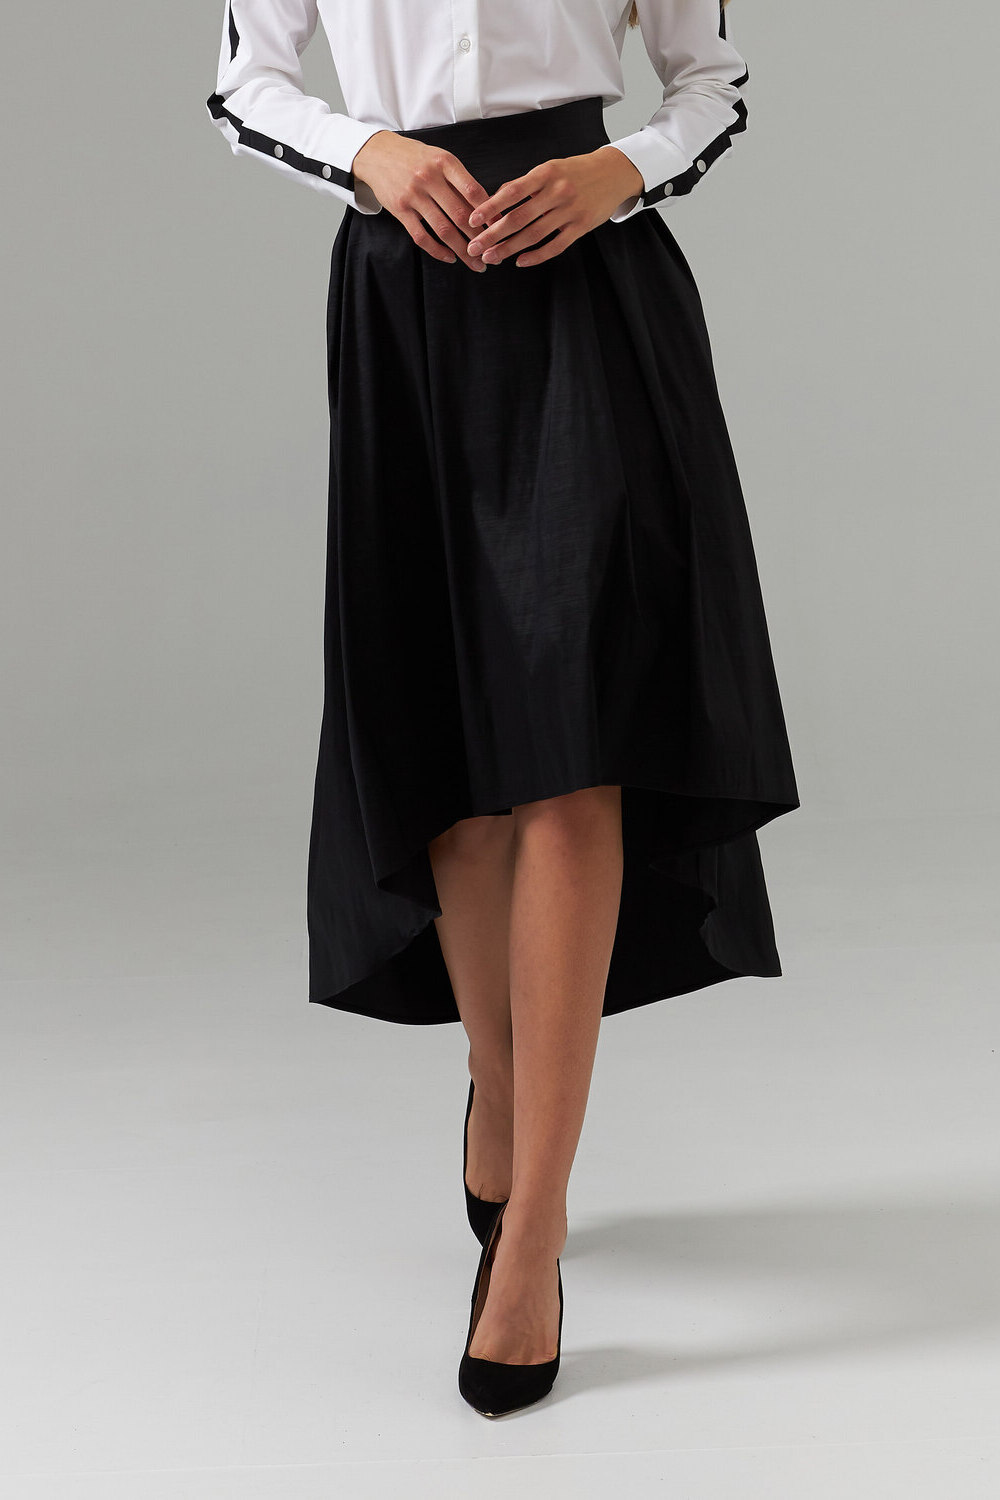 Joseph Ribkoff Skirt Style 203409. Black